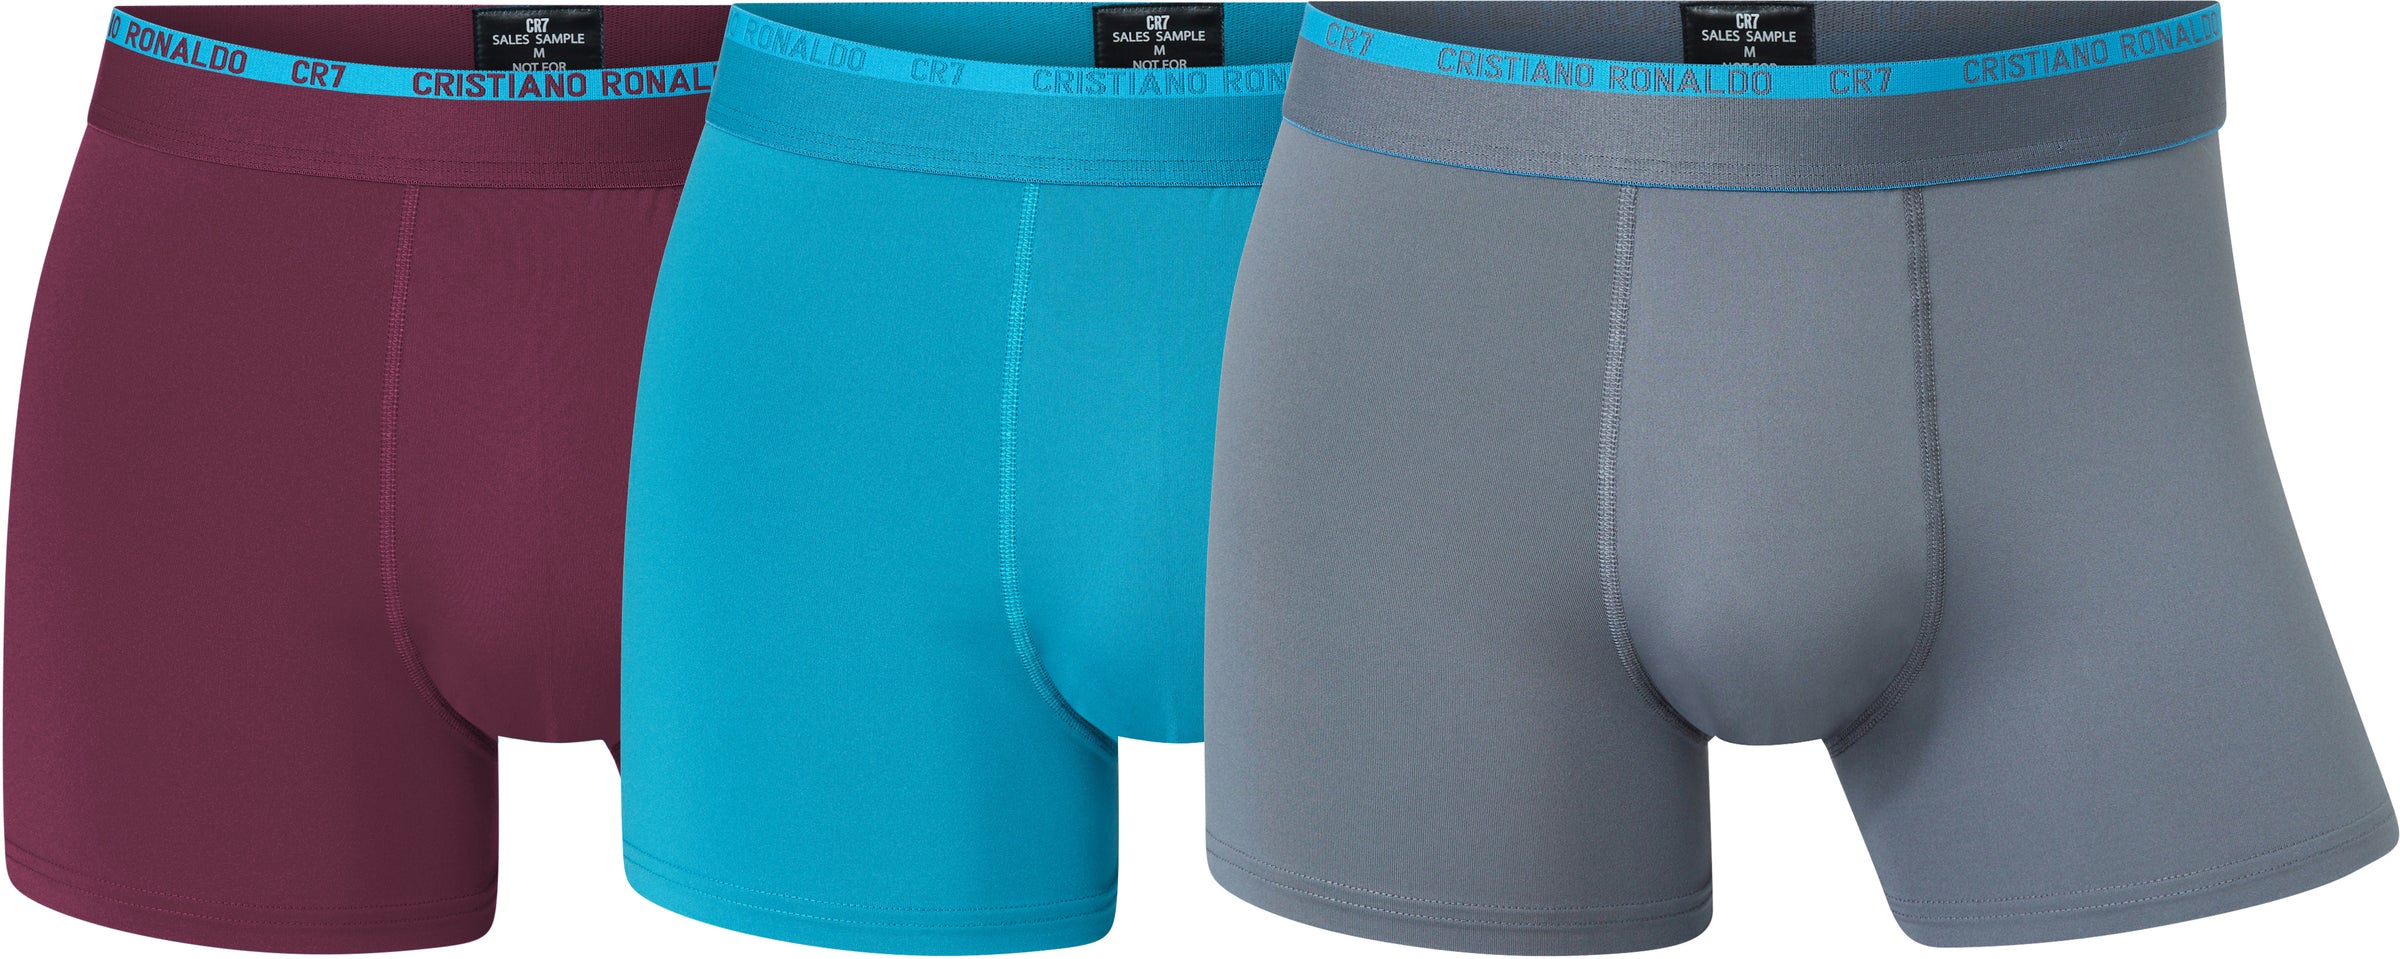 Cristiano Ronaldo CR7 Basic 3-Pack Cotton Briefs Men's Underwear XL